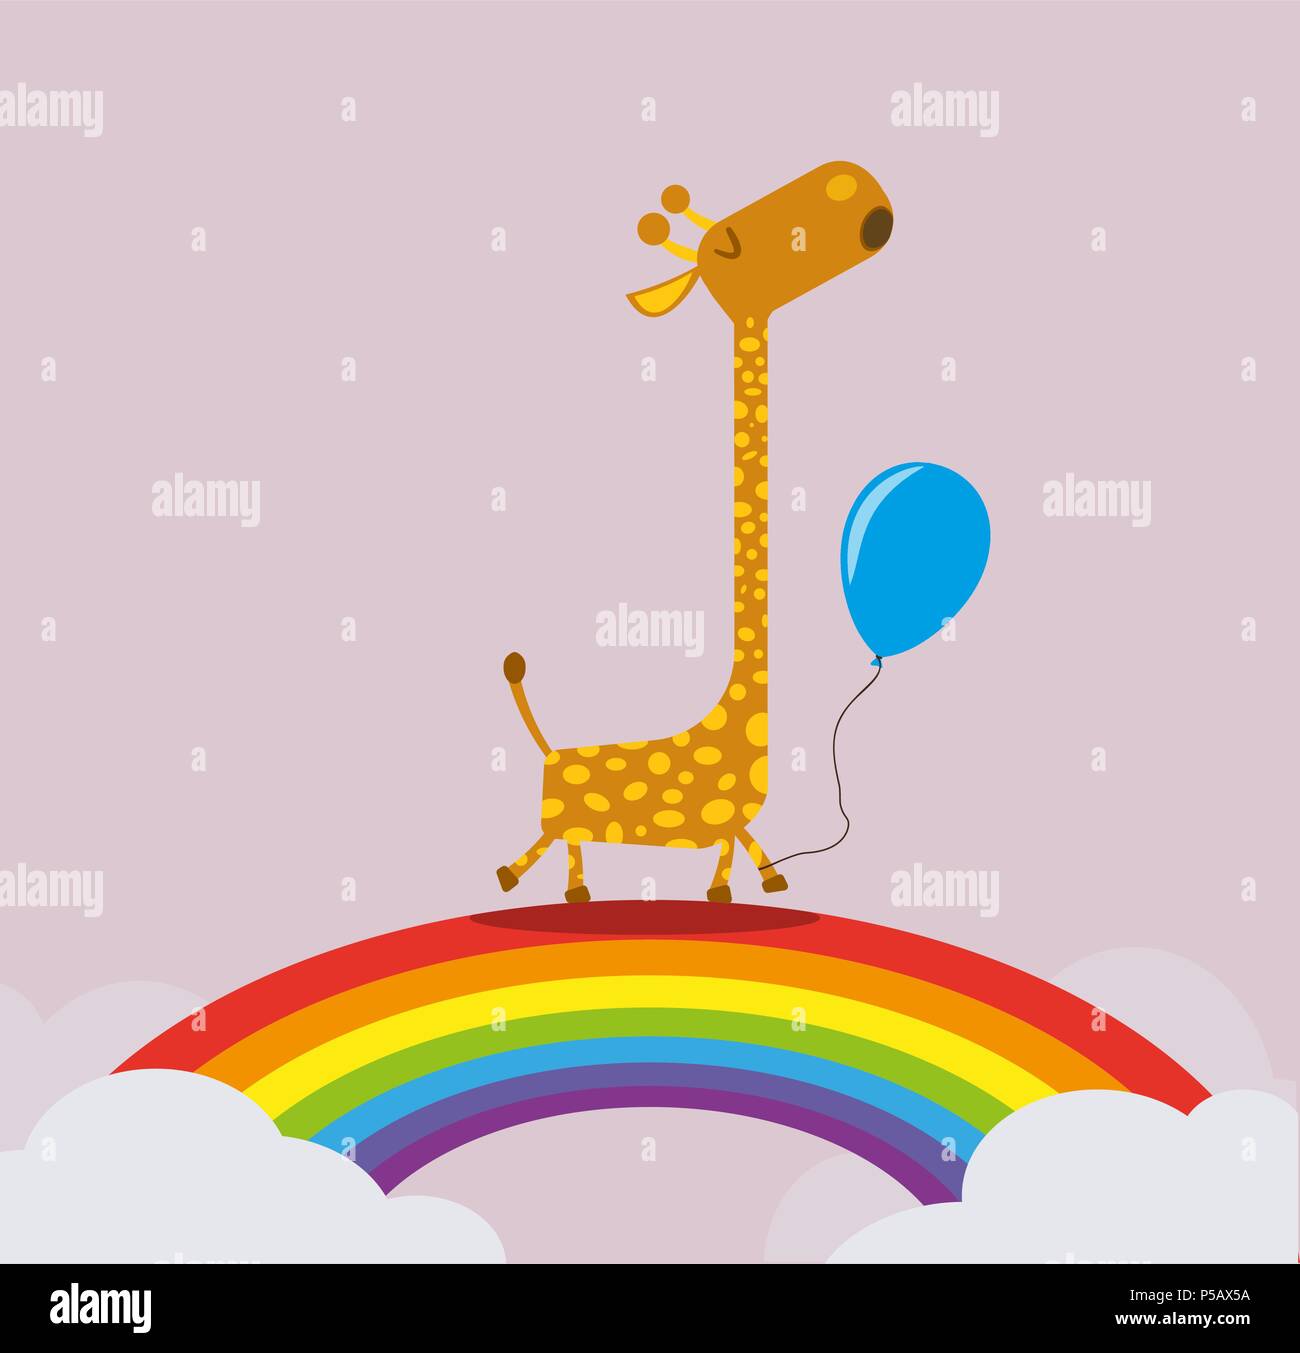 giraffe holding balloon walking on rainbow greeting card template Stock Vector